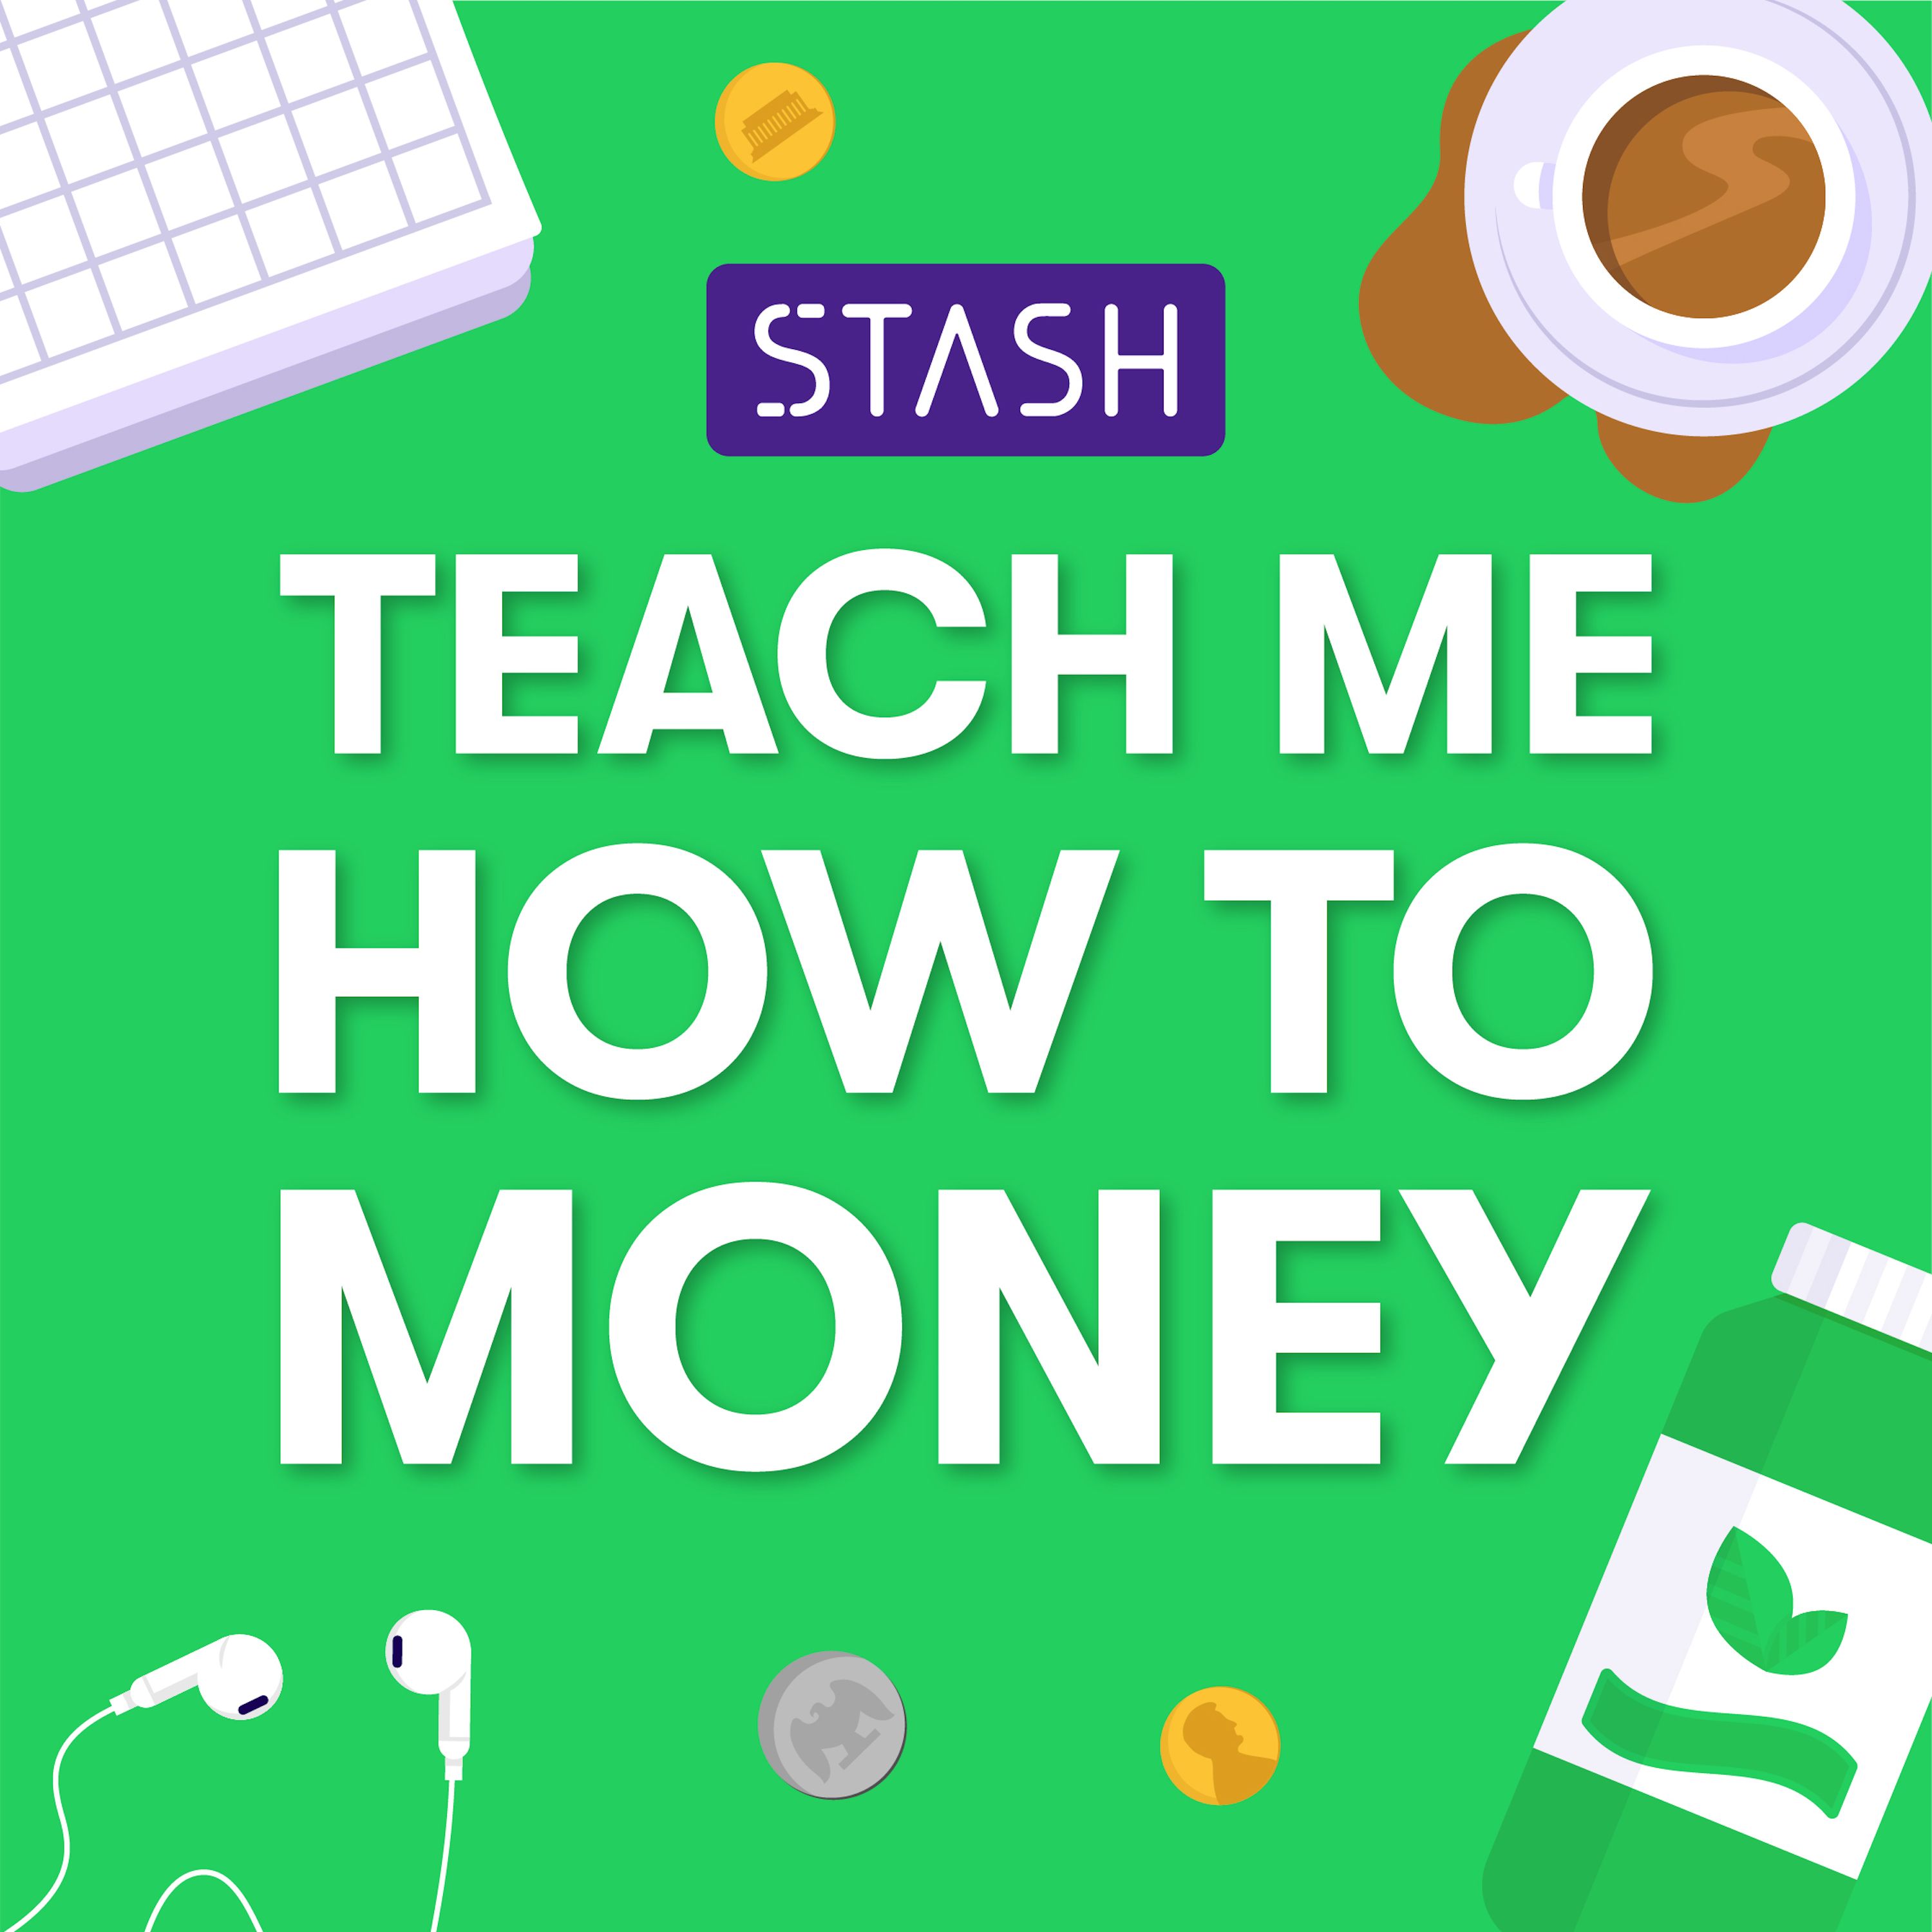 Teach Me To Do a “Money Cleanse”